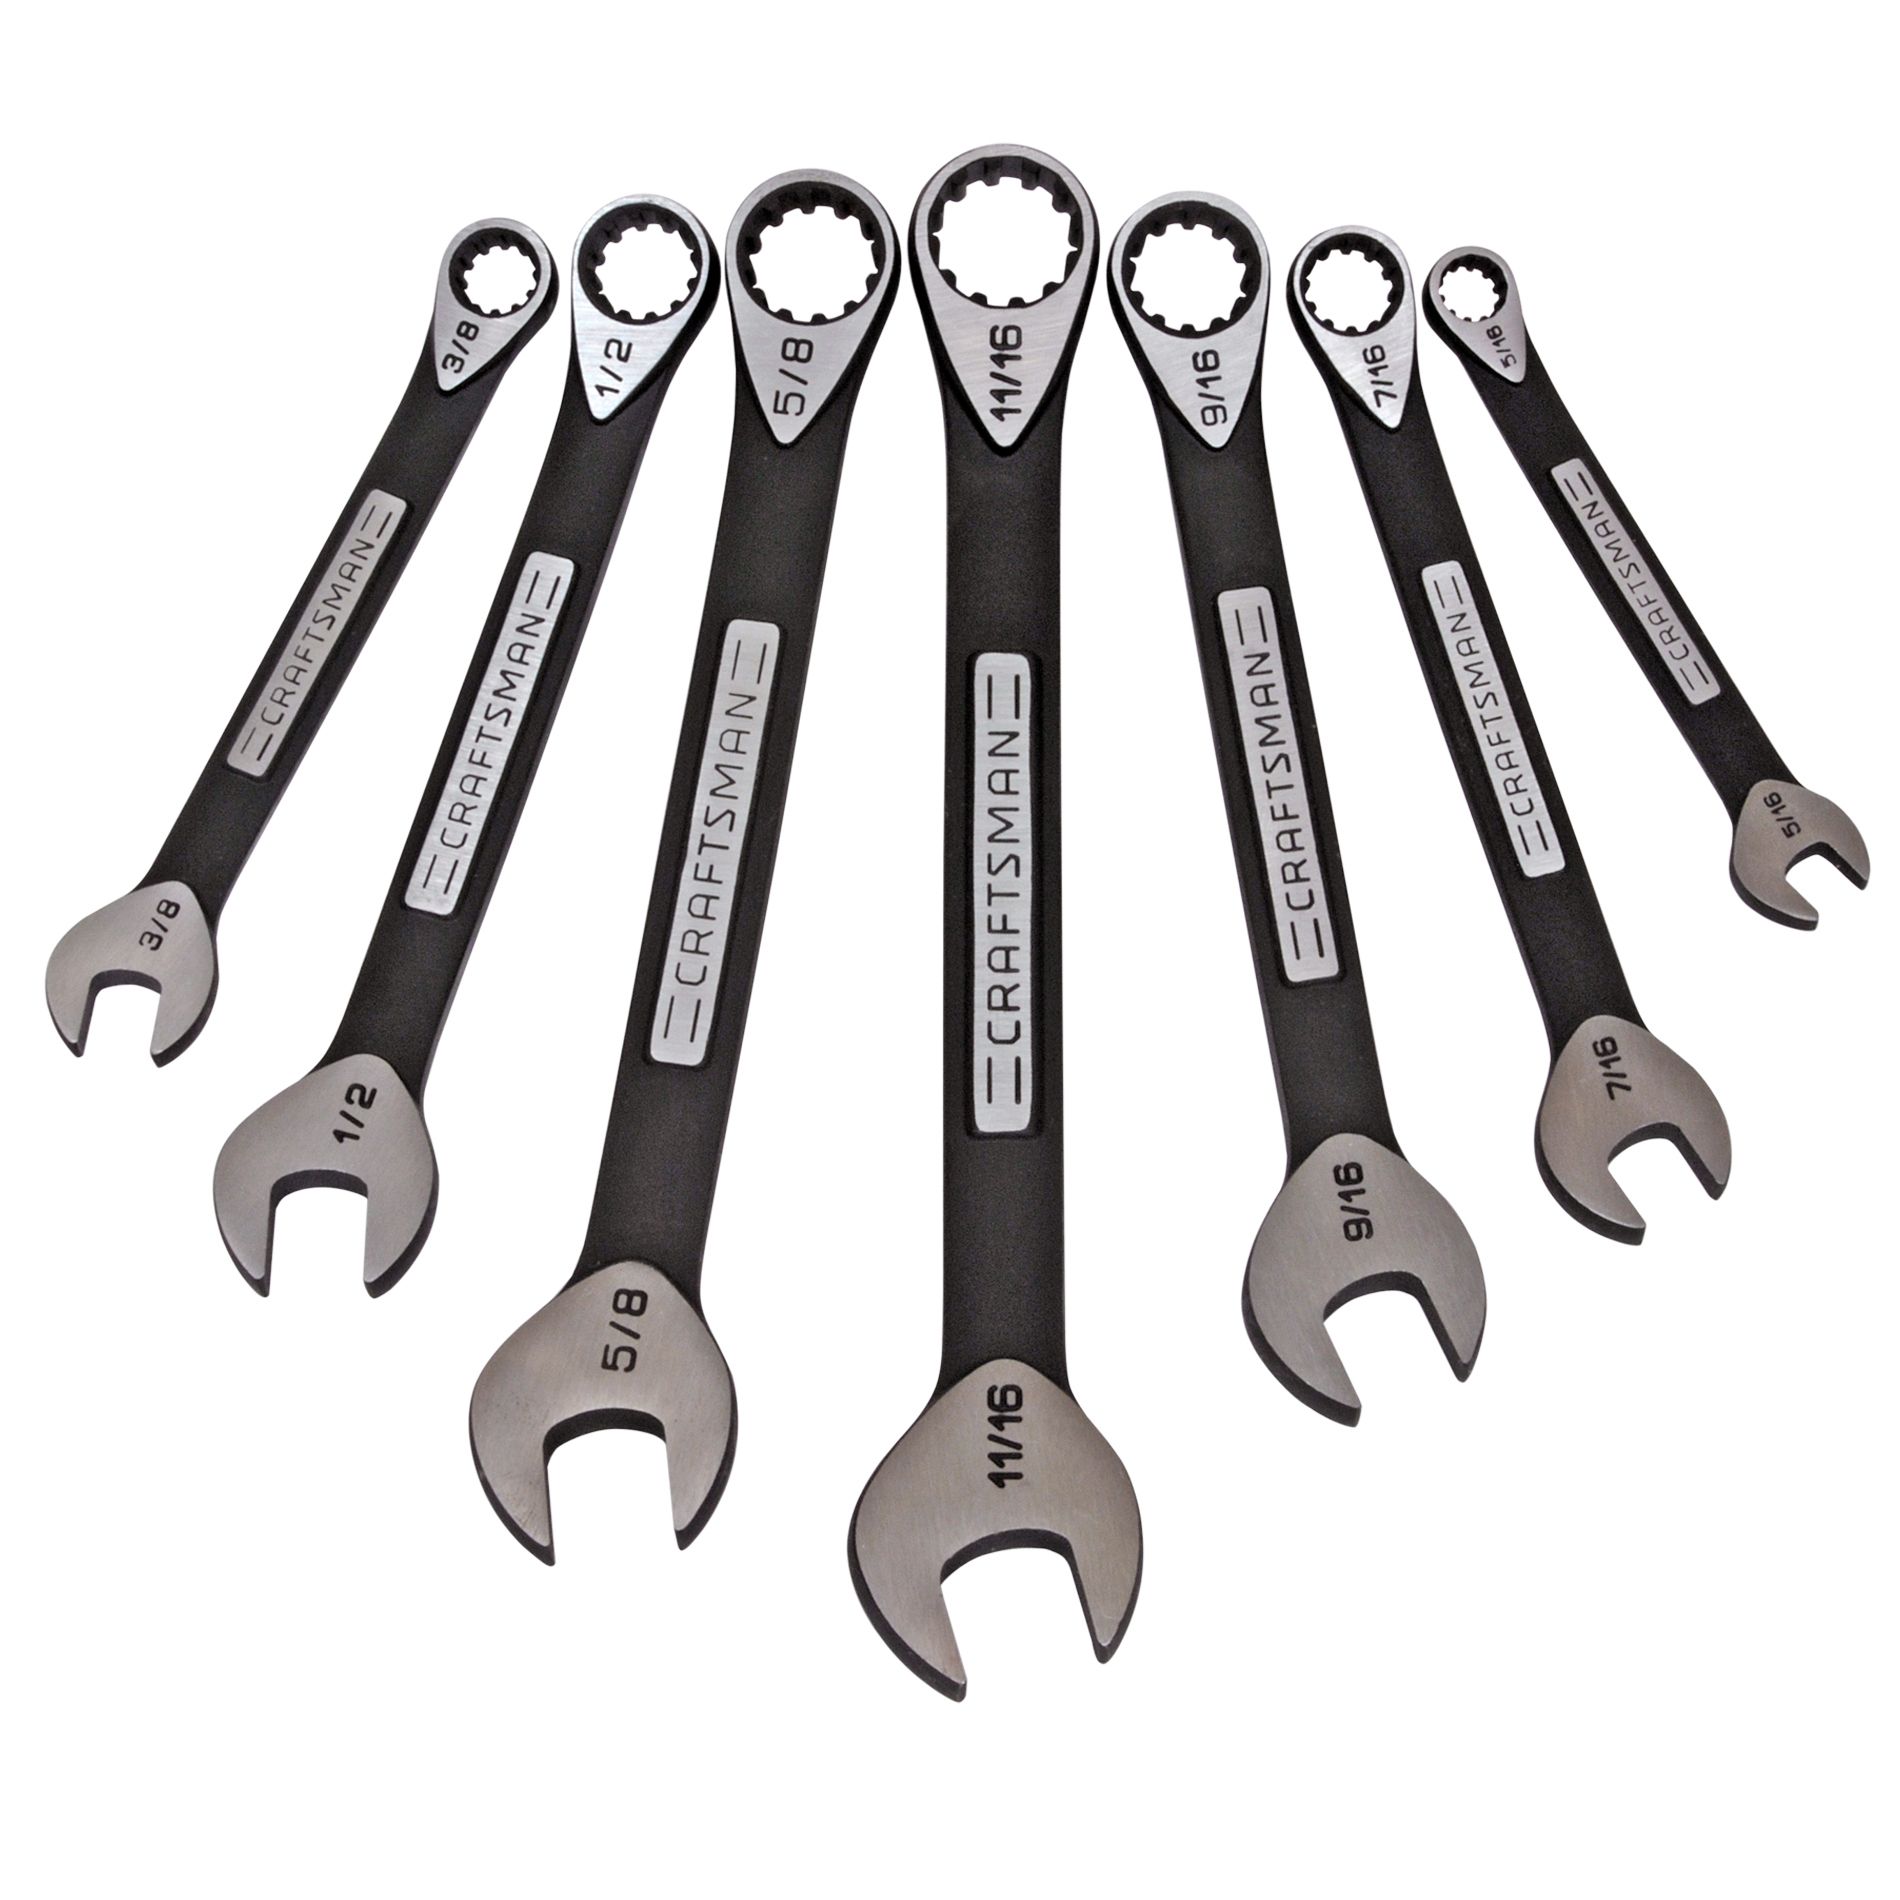 Craftsman 7 pc. Universal Wrench Set - Standard